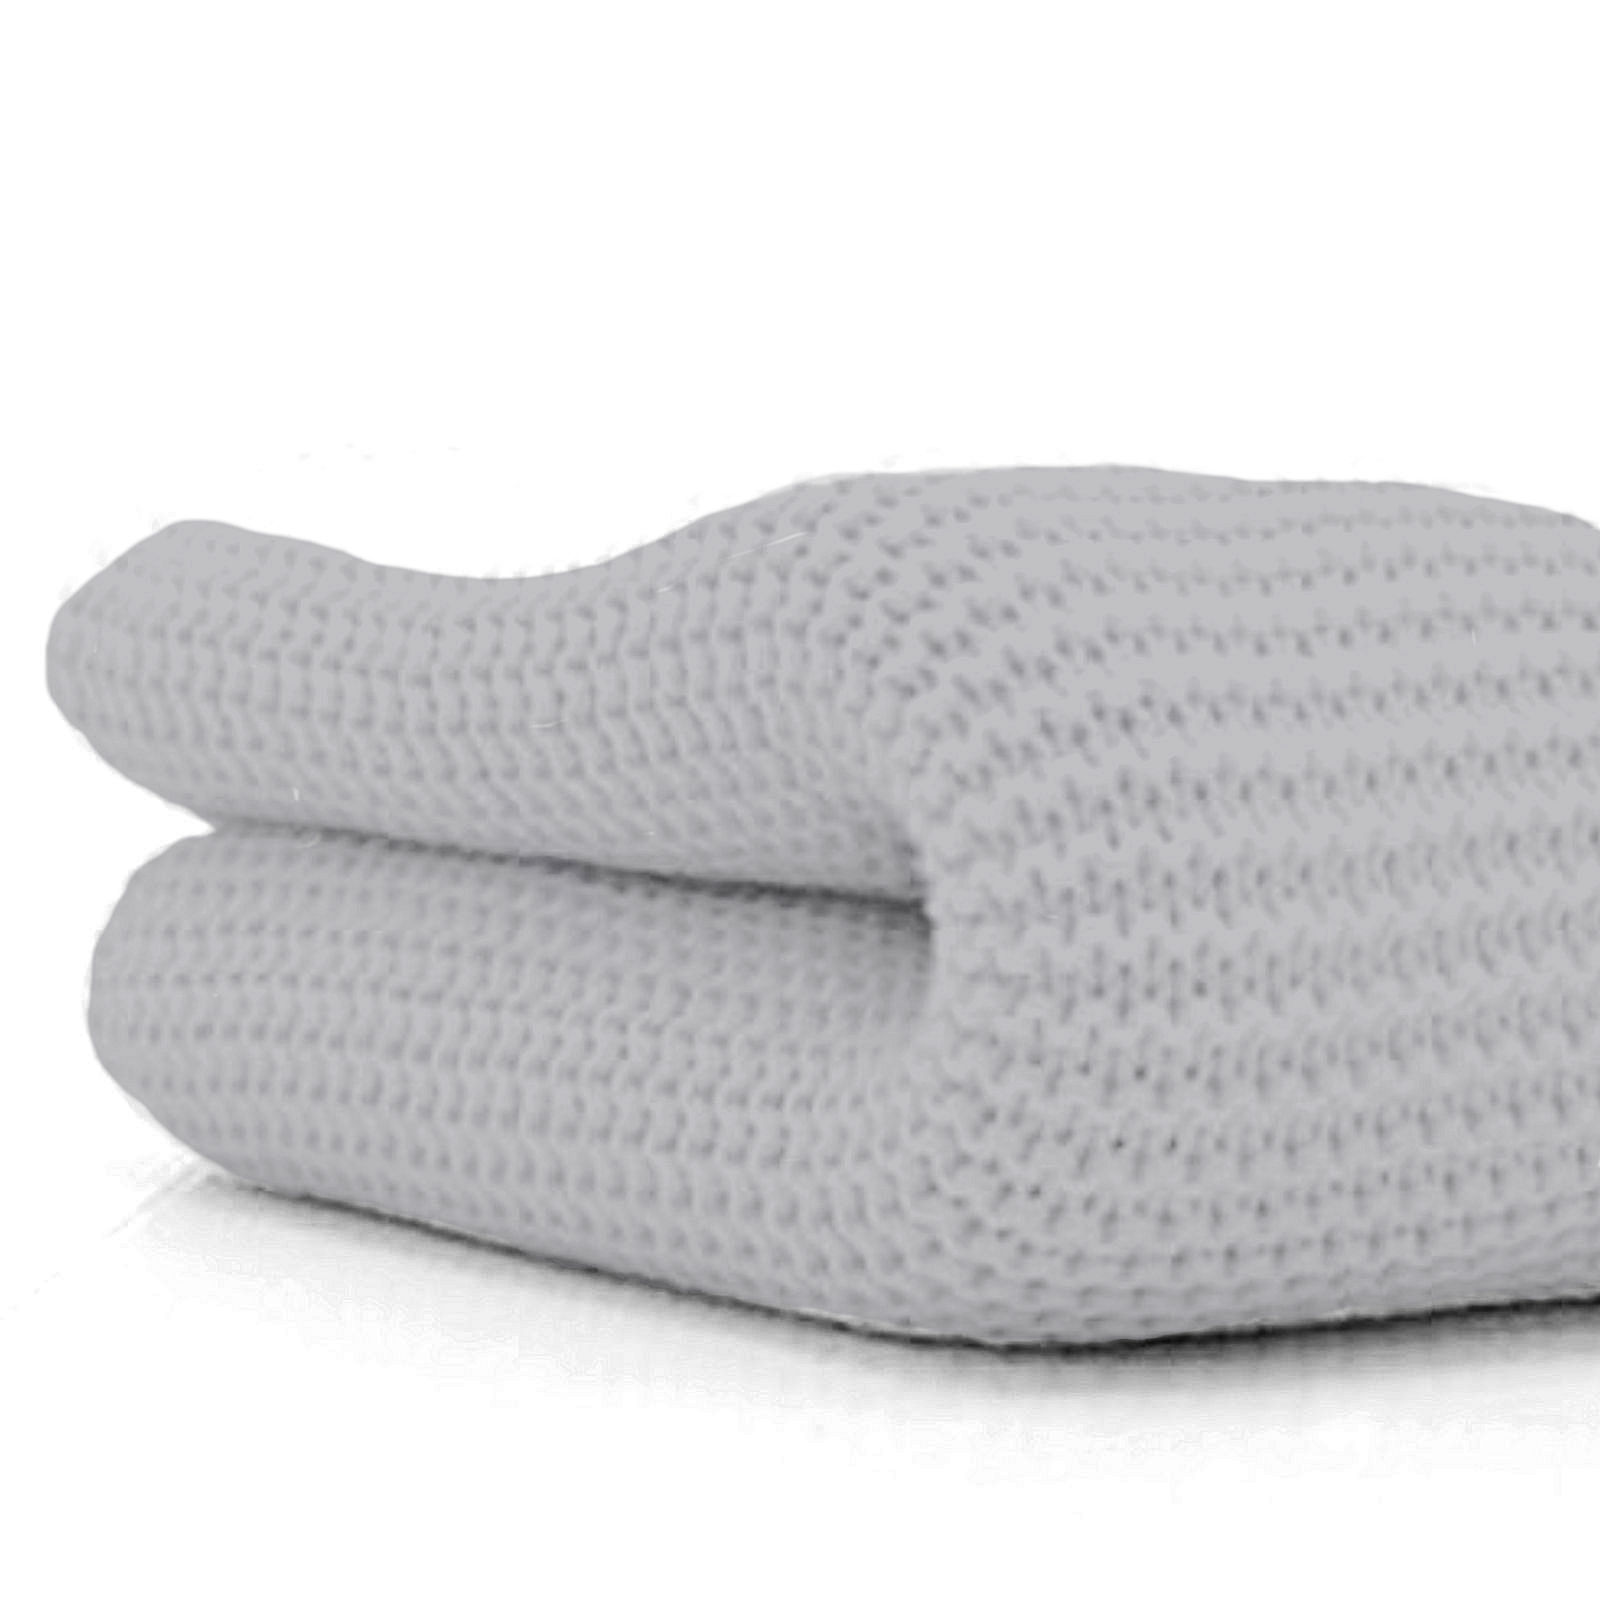 4baby Soft Cotton Cellular Pram / Moses Basket Blanket - Grey